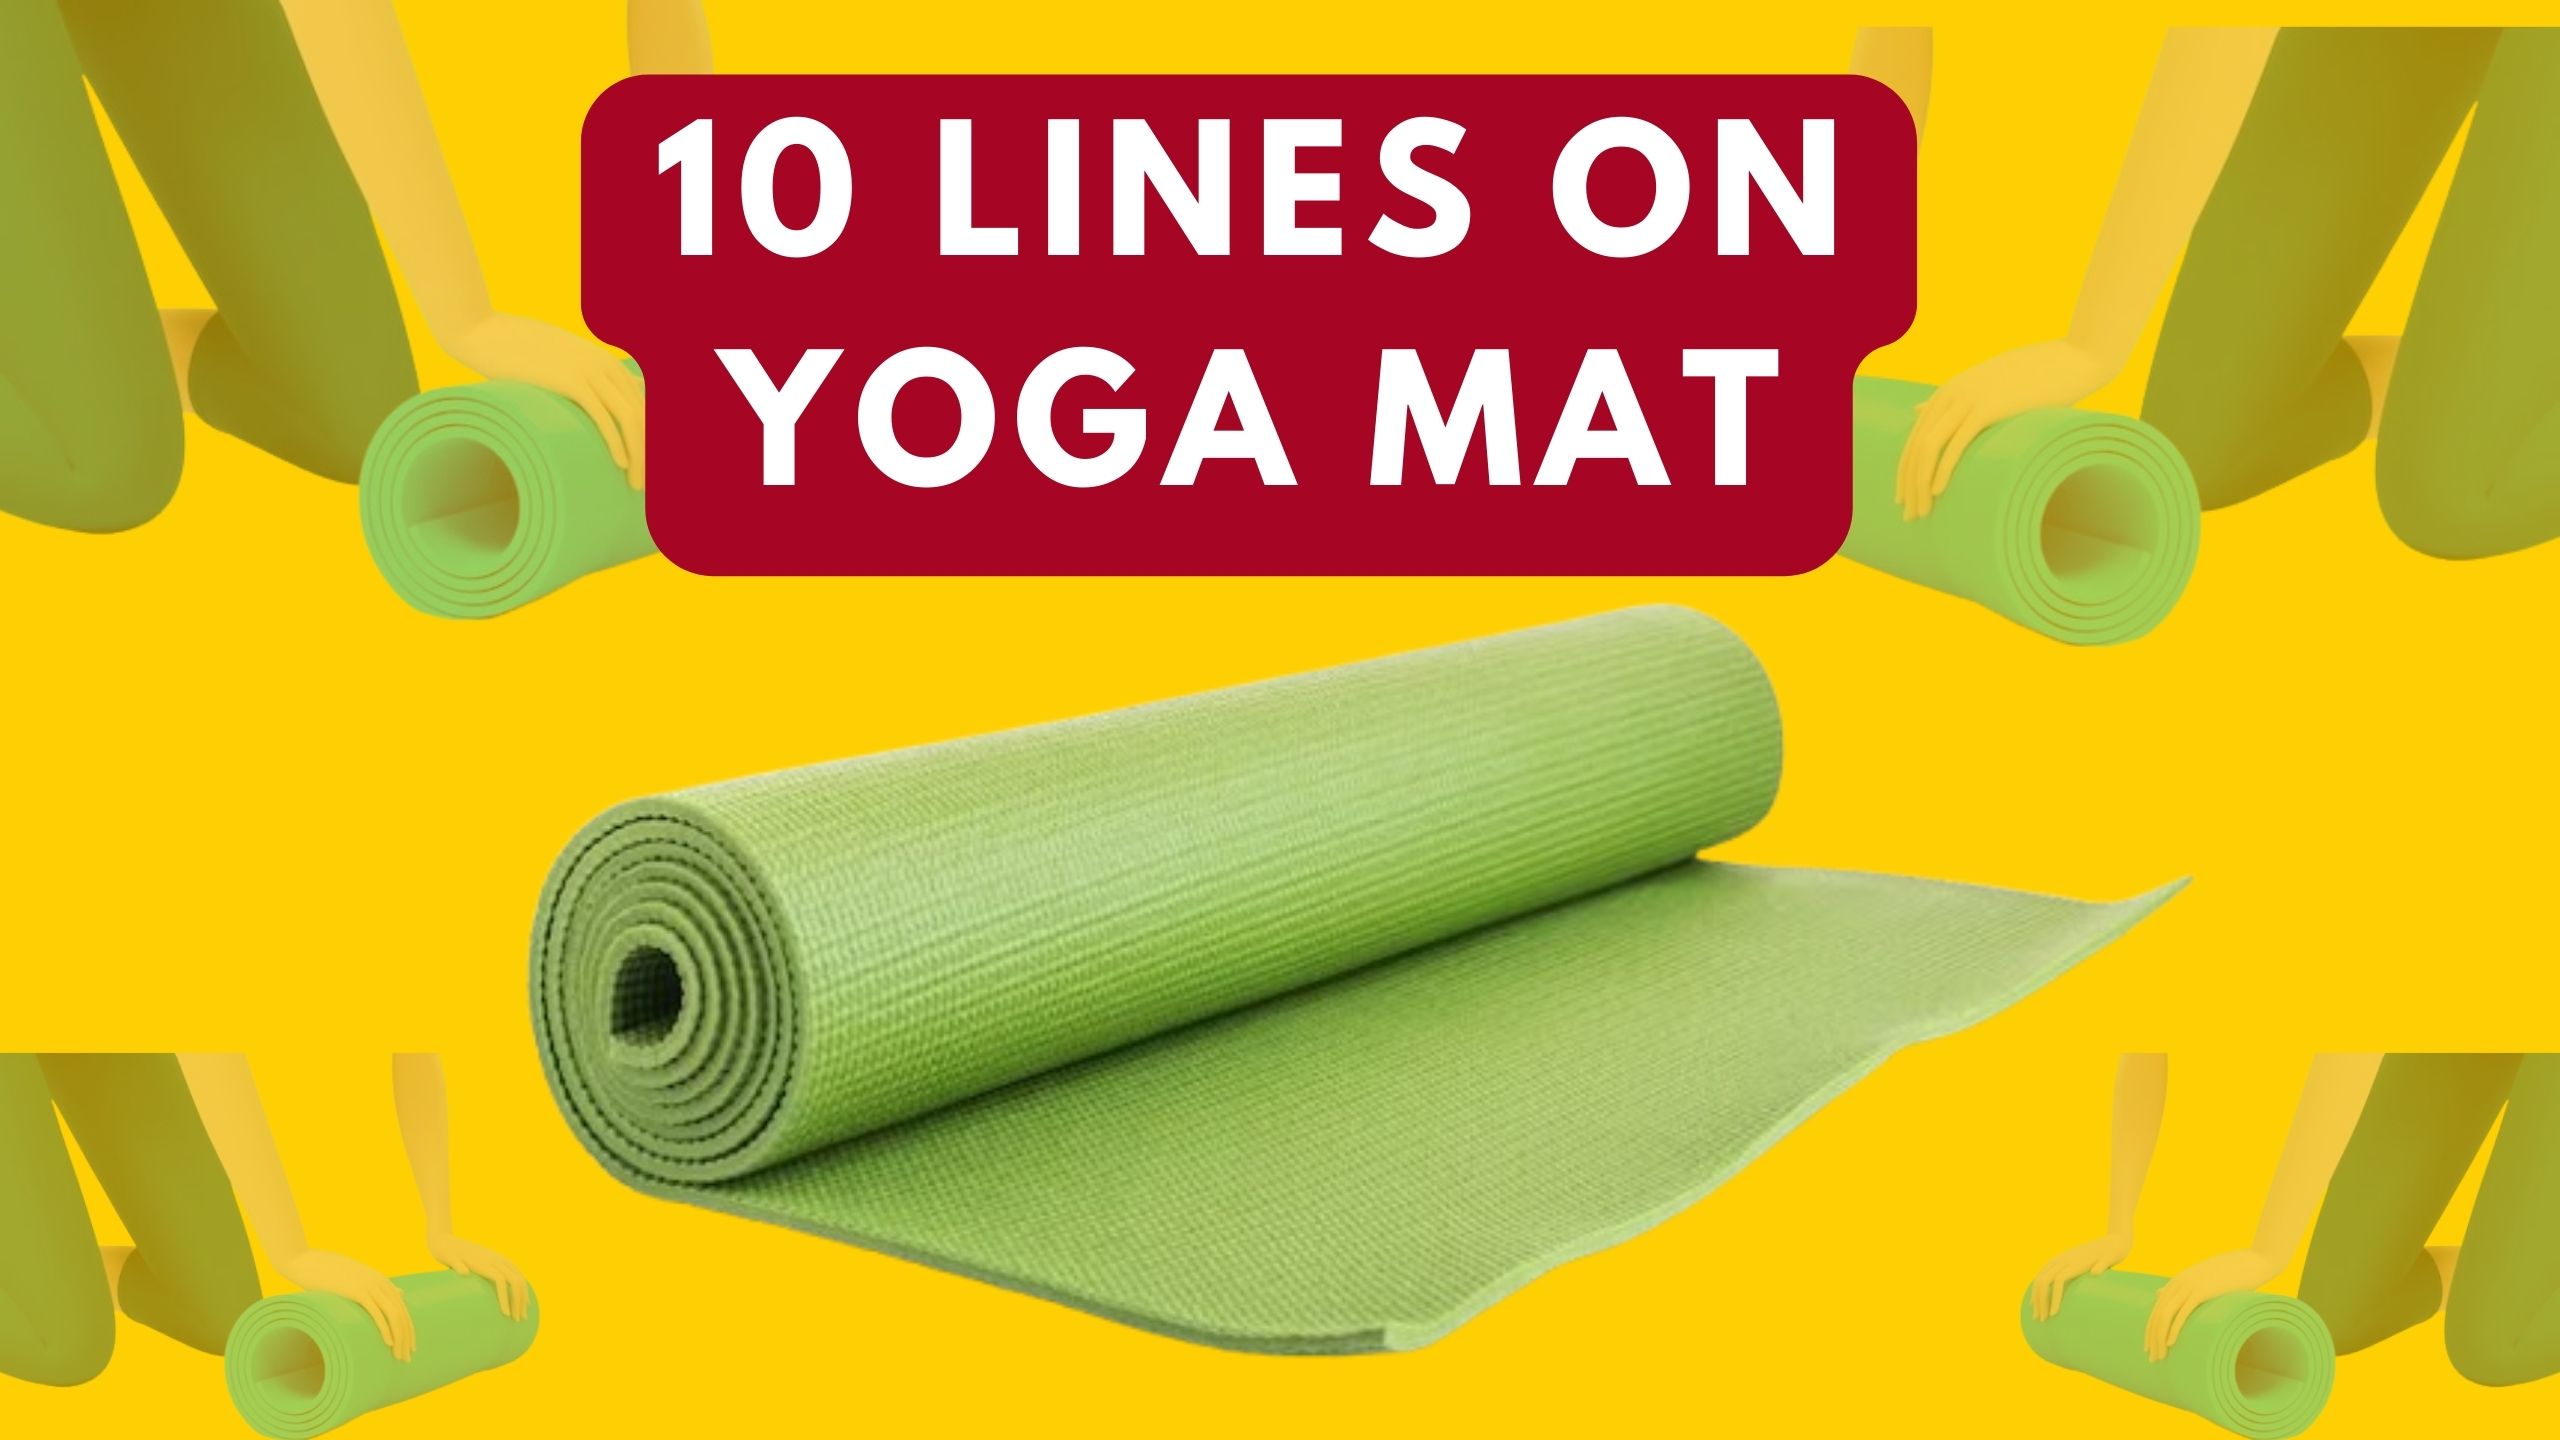 10 Lines on Yoga Mat